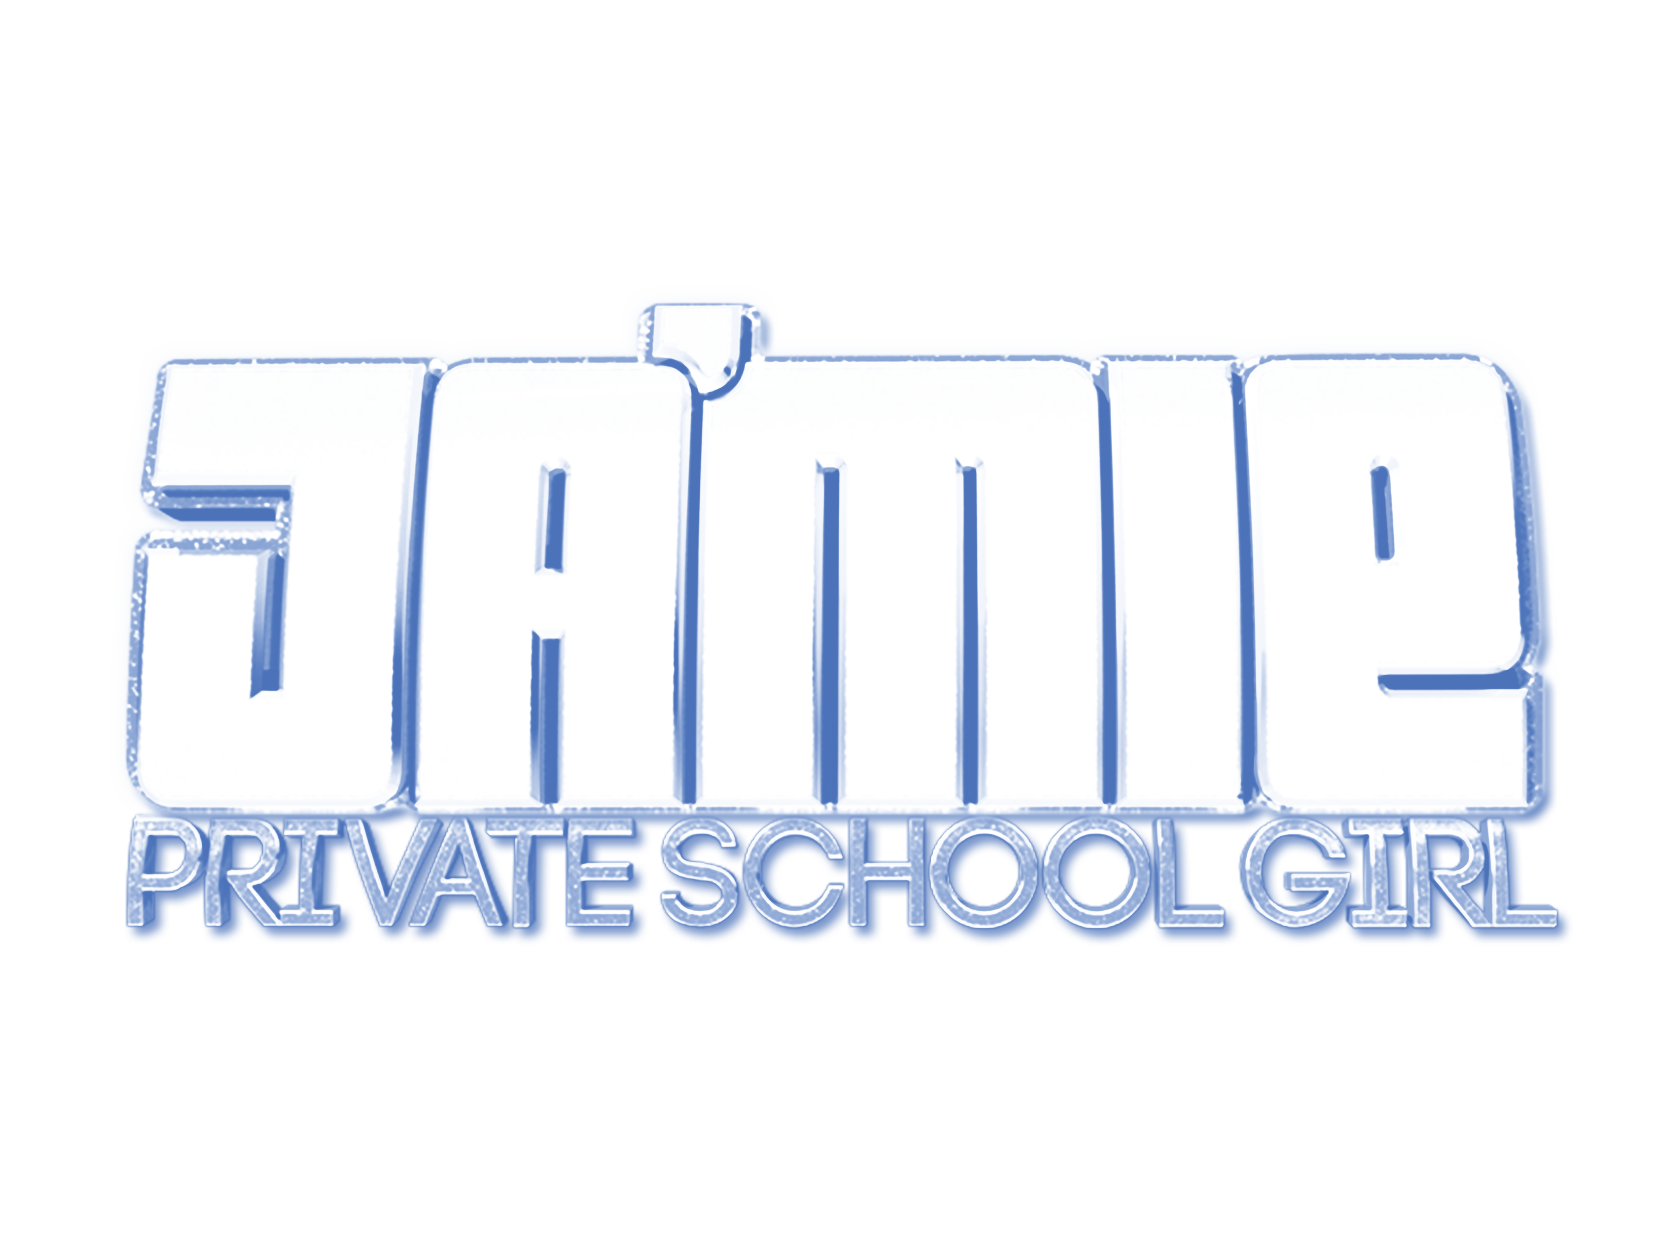 Jamie Private School Girl